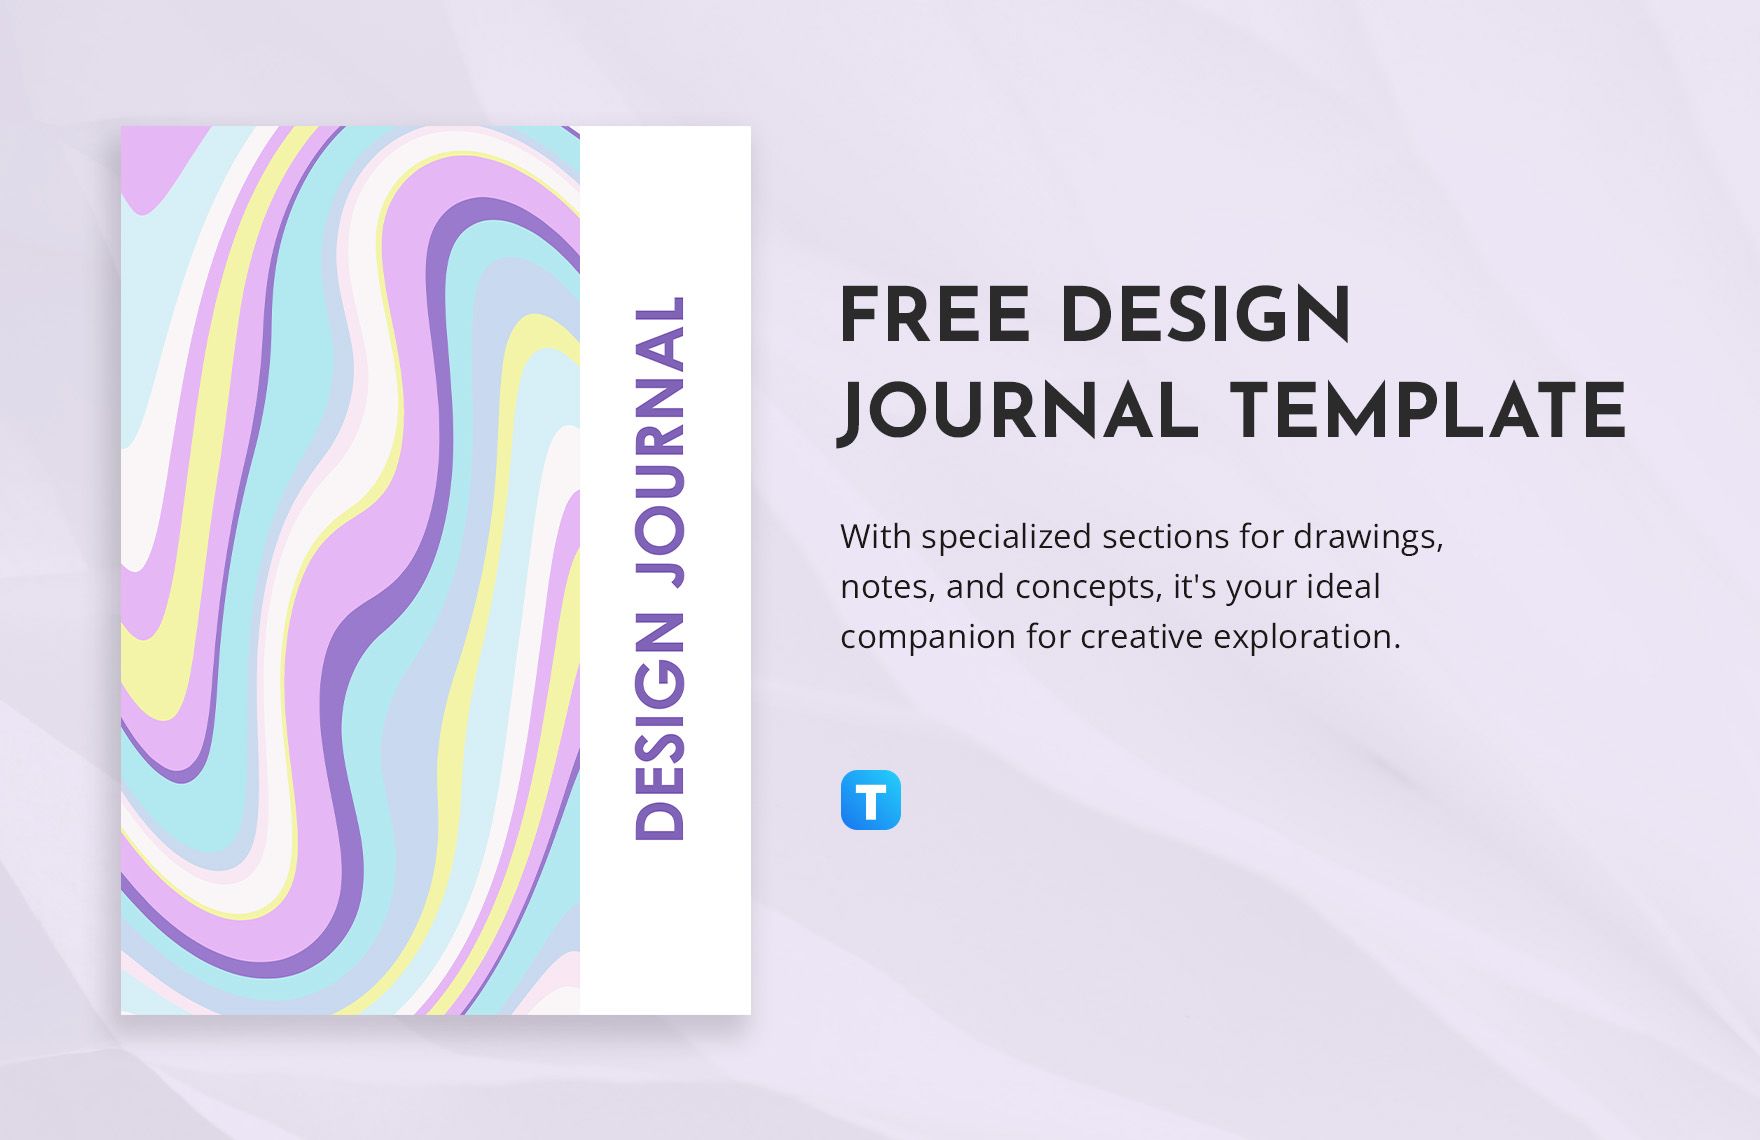 Free Design Journal Template